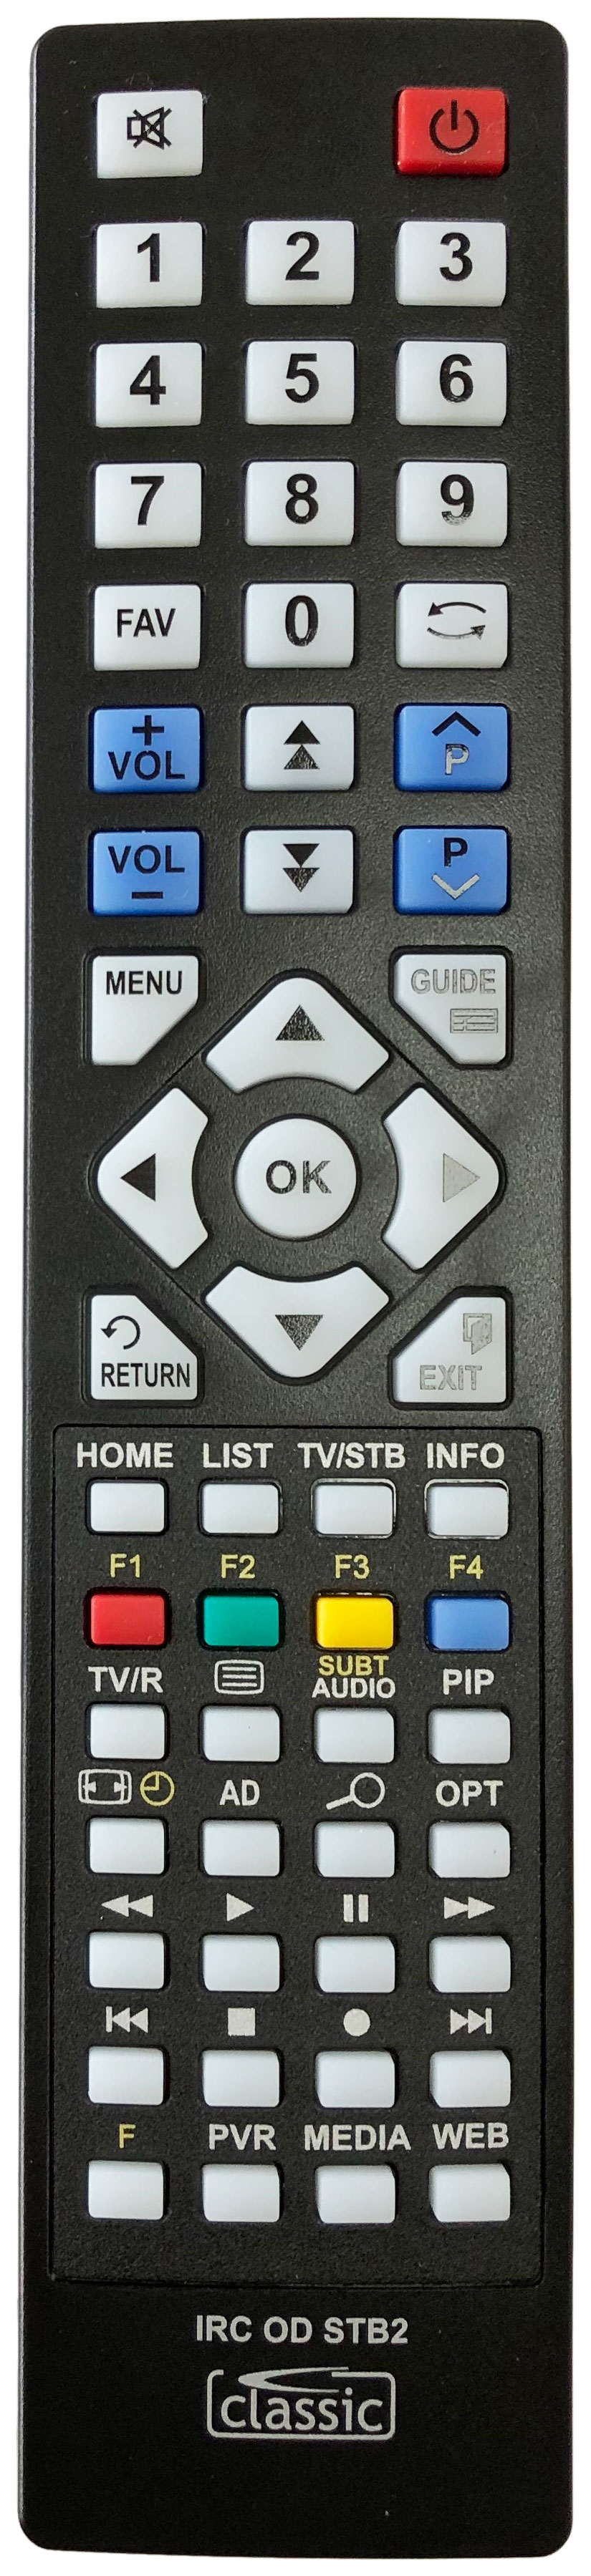 SAGEM DTR94HD Remote Control